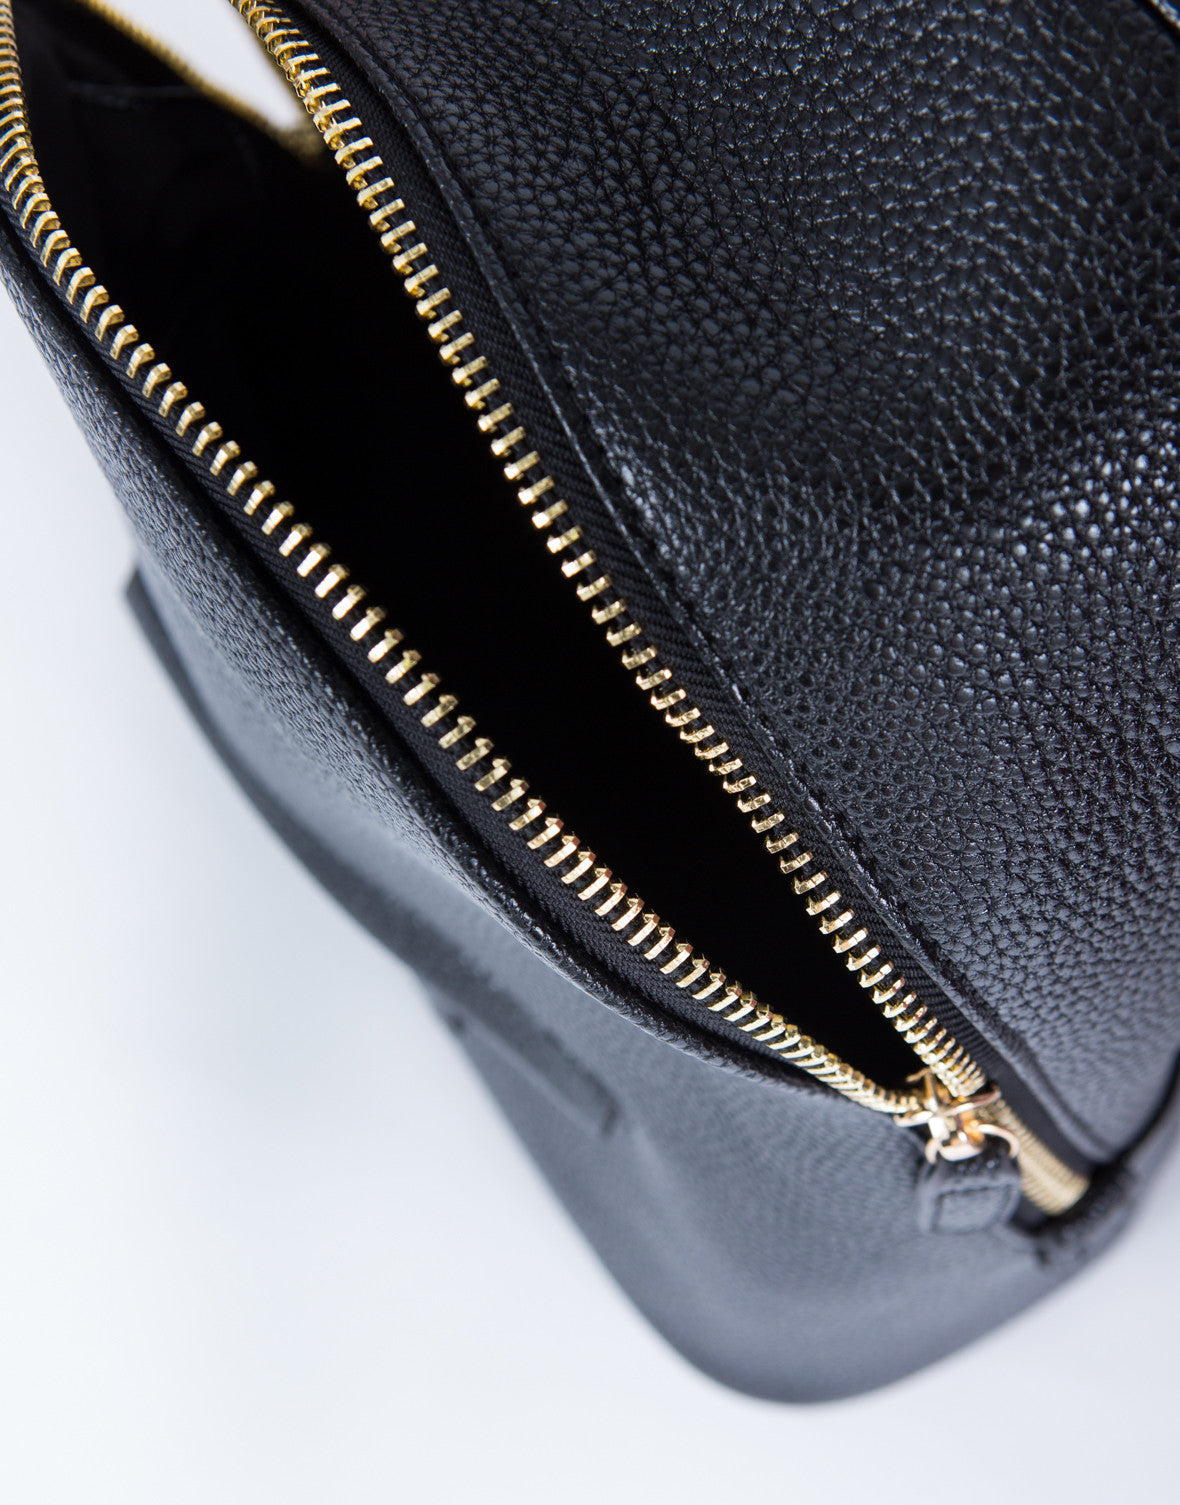 Zipped Up Backpack - Black Leather Backpack - Black Zip Up Bag – 2020AVE